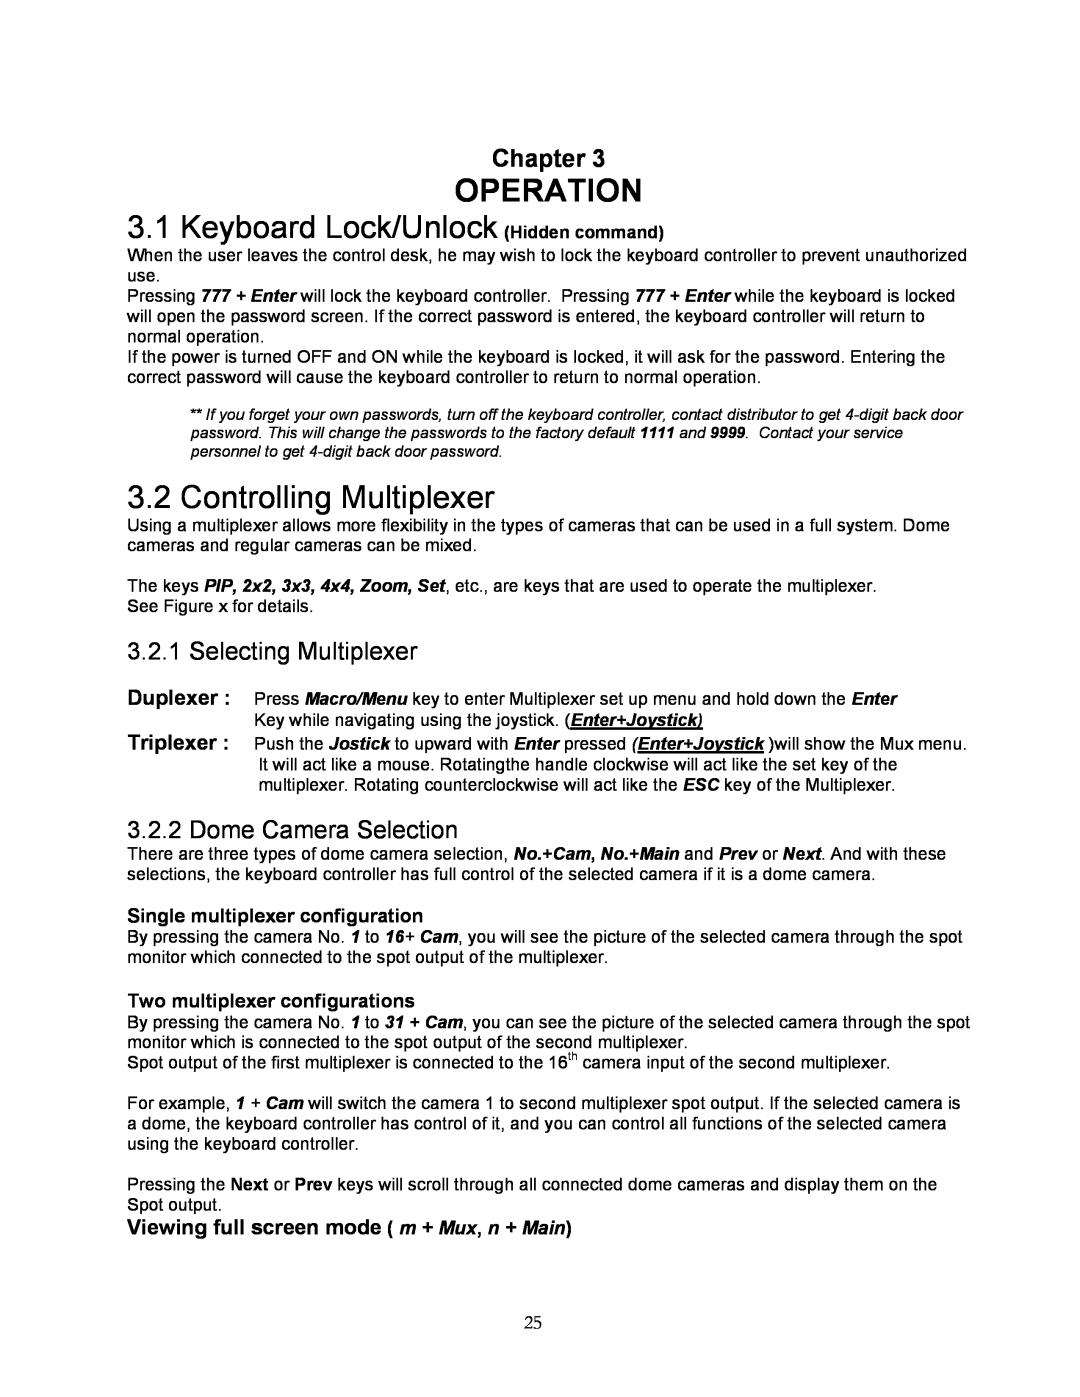 Speco Technologies KBD-927 Operation, Keyboard Lock/Unlock Hidden command, Controlling Multiplexer, Selecting Multiplexer 